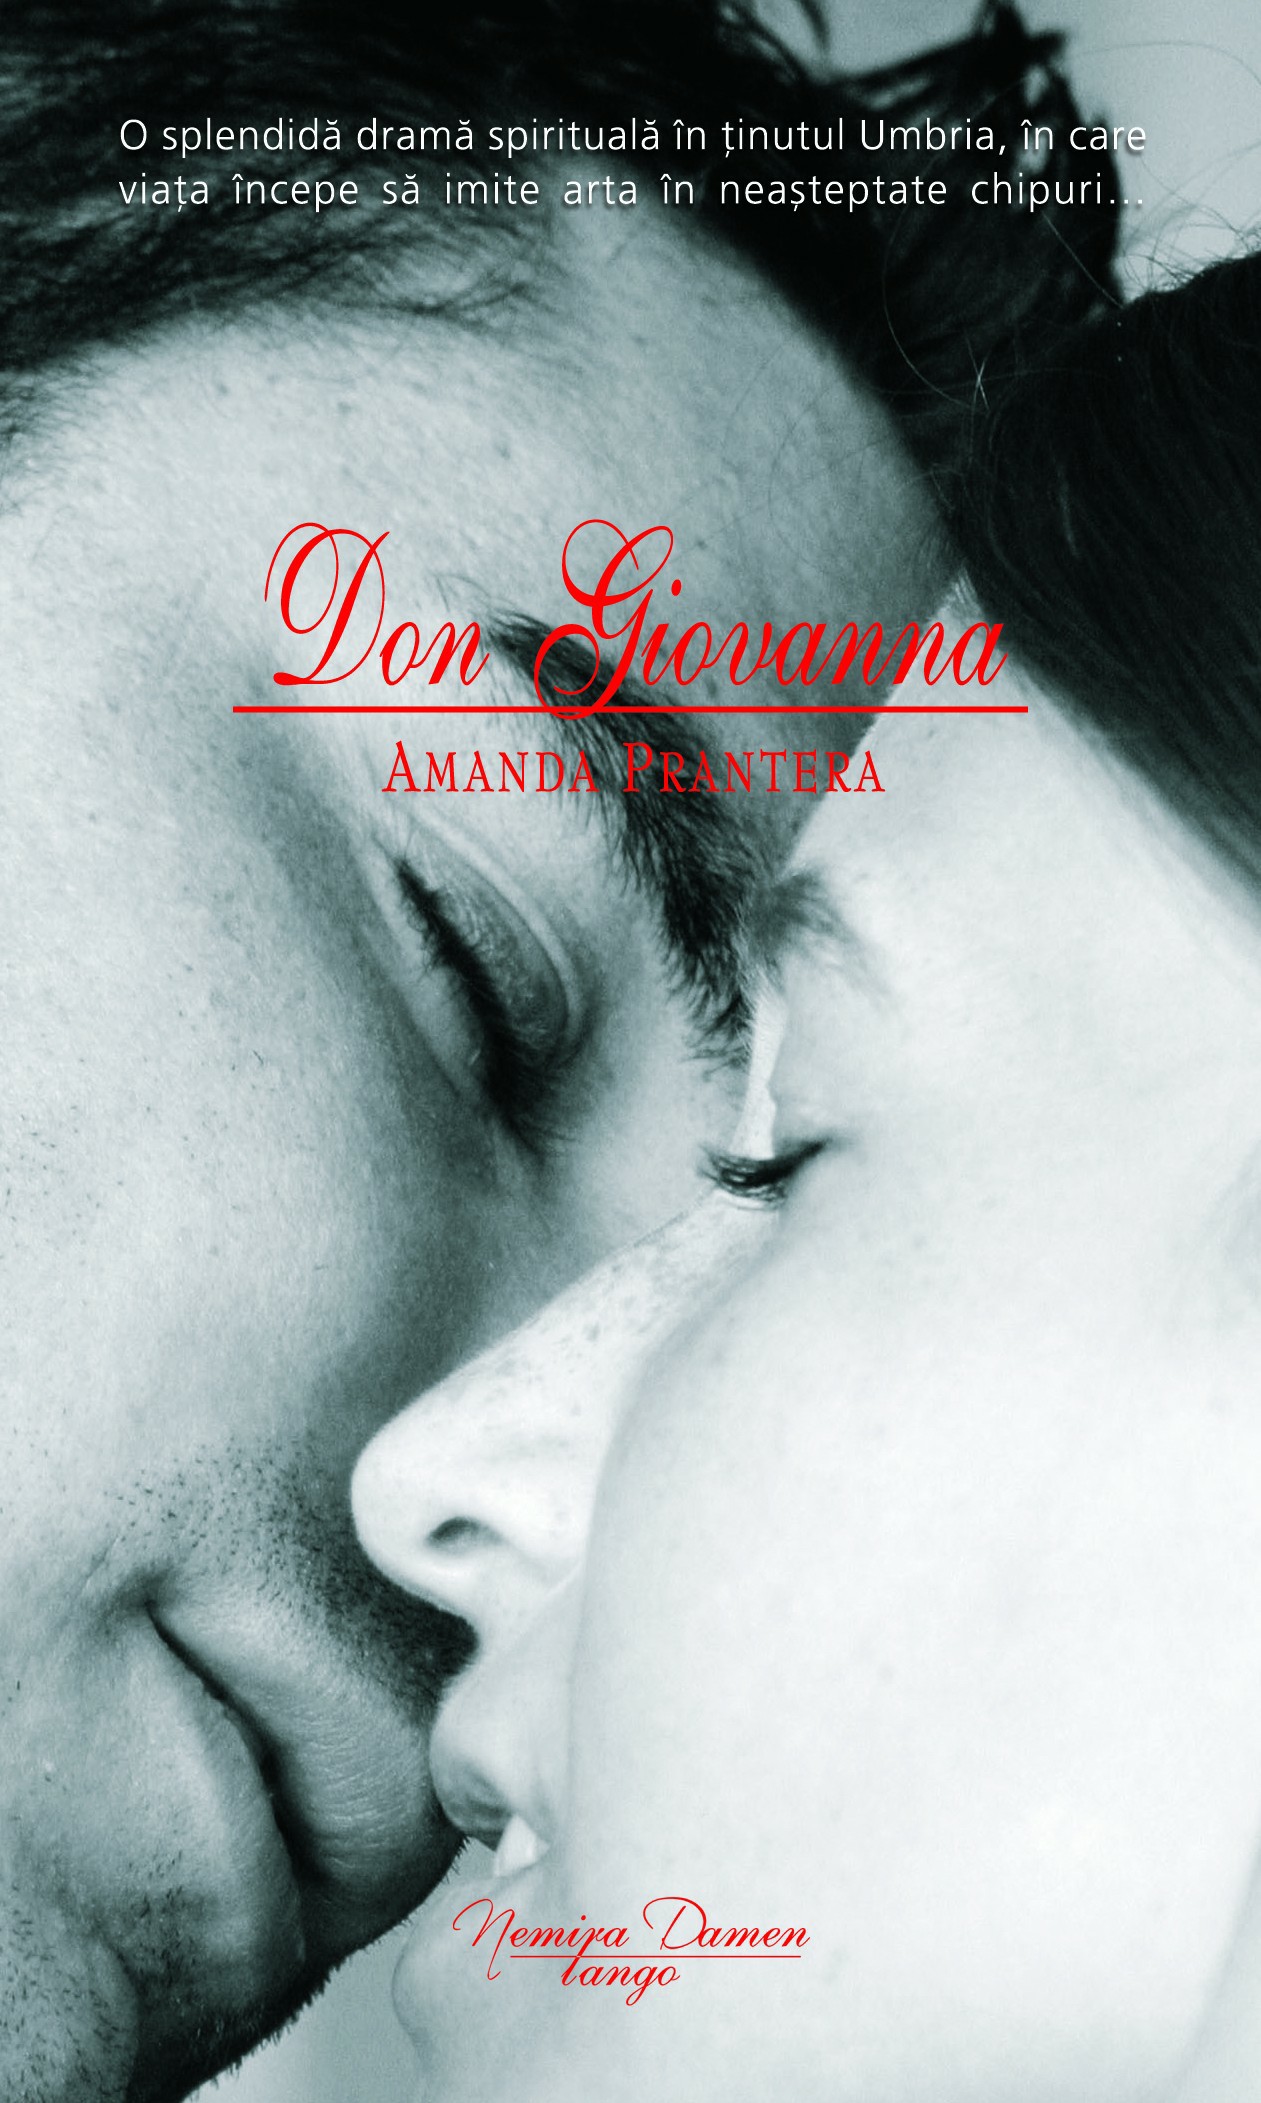 Noutăţi Gaudeamus (3): Amanda Prantera – “Don Giovanna”